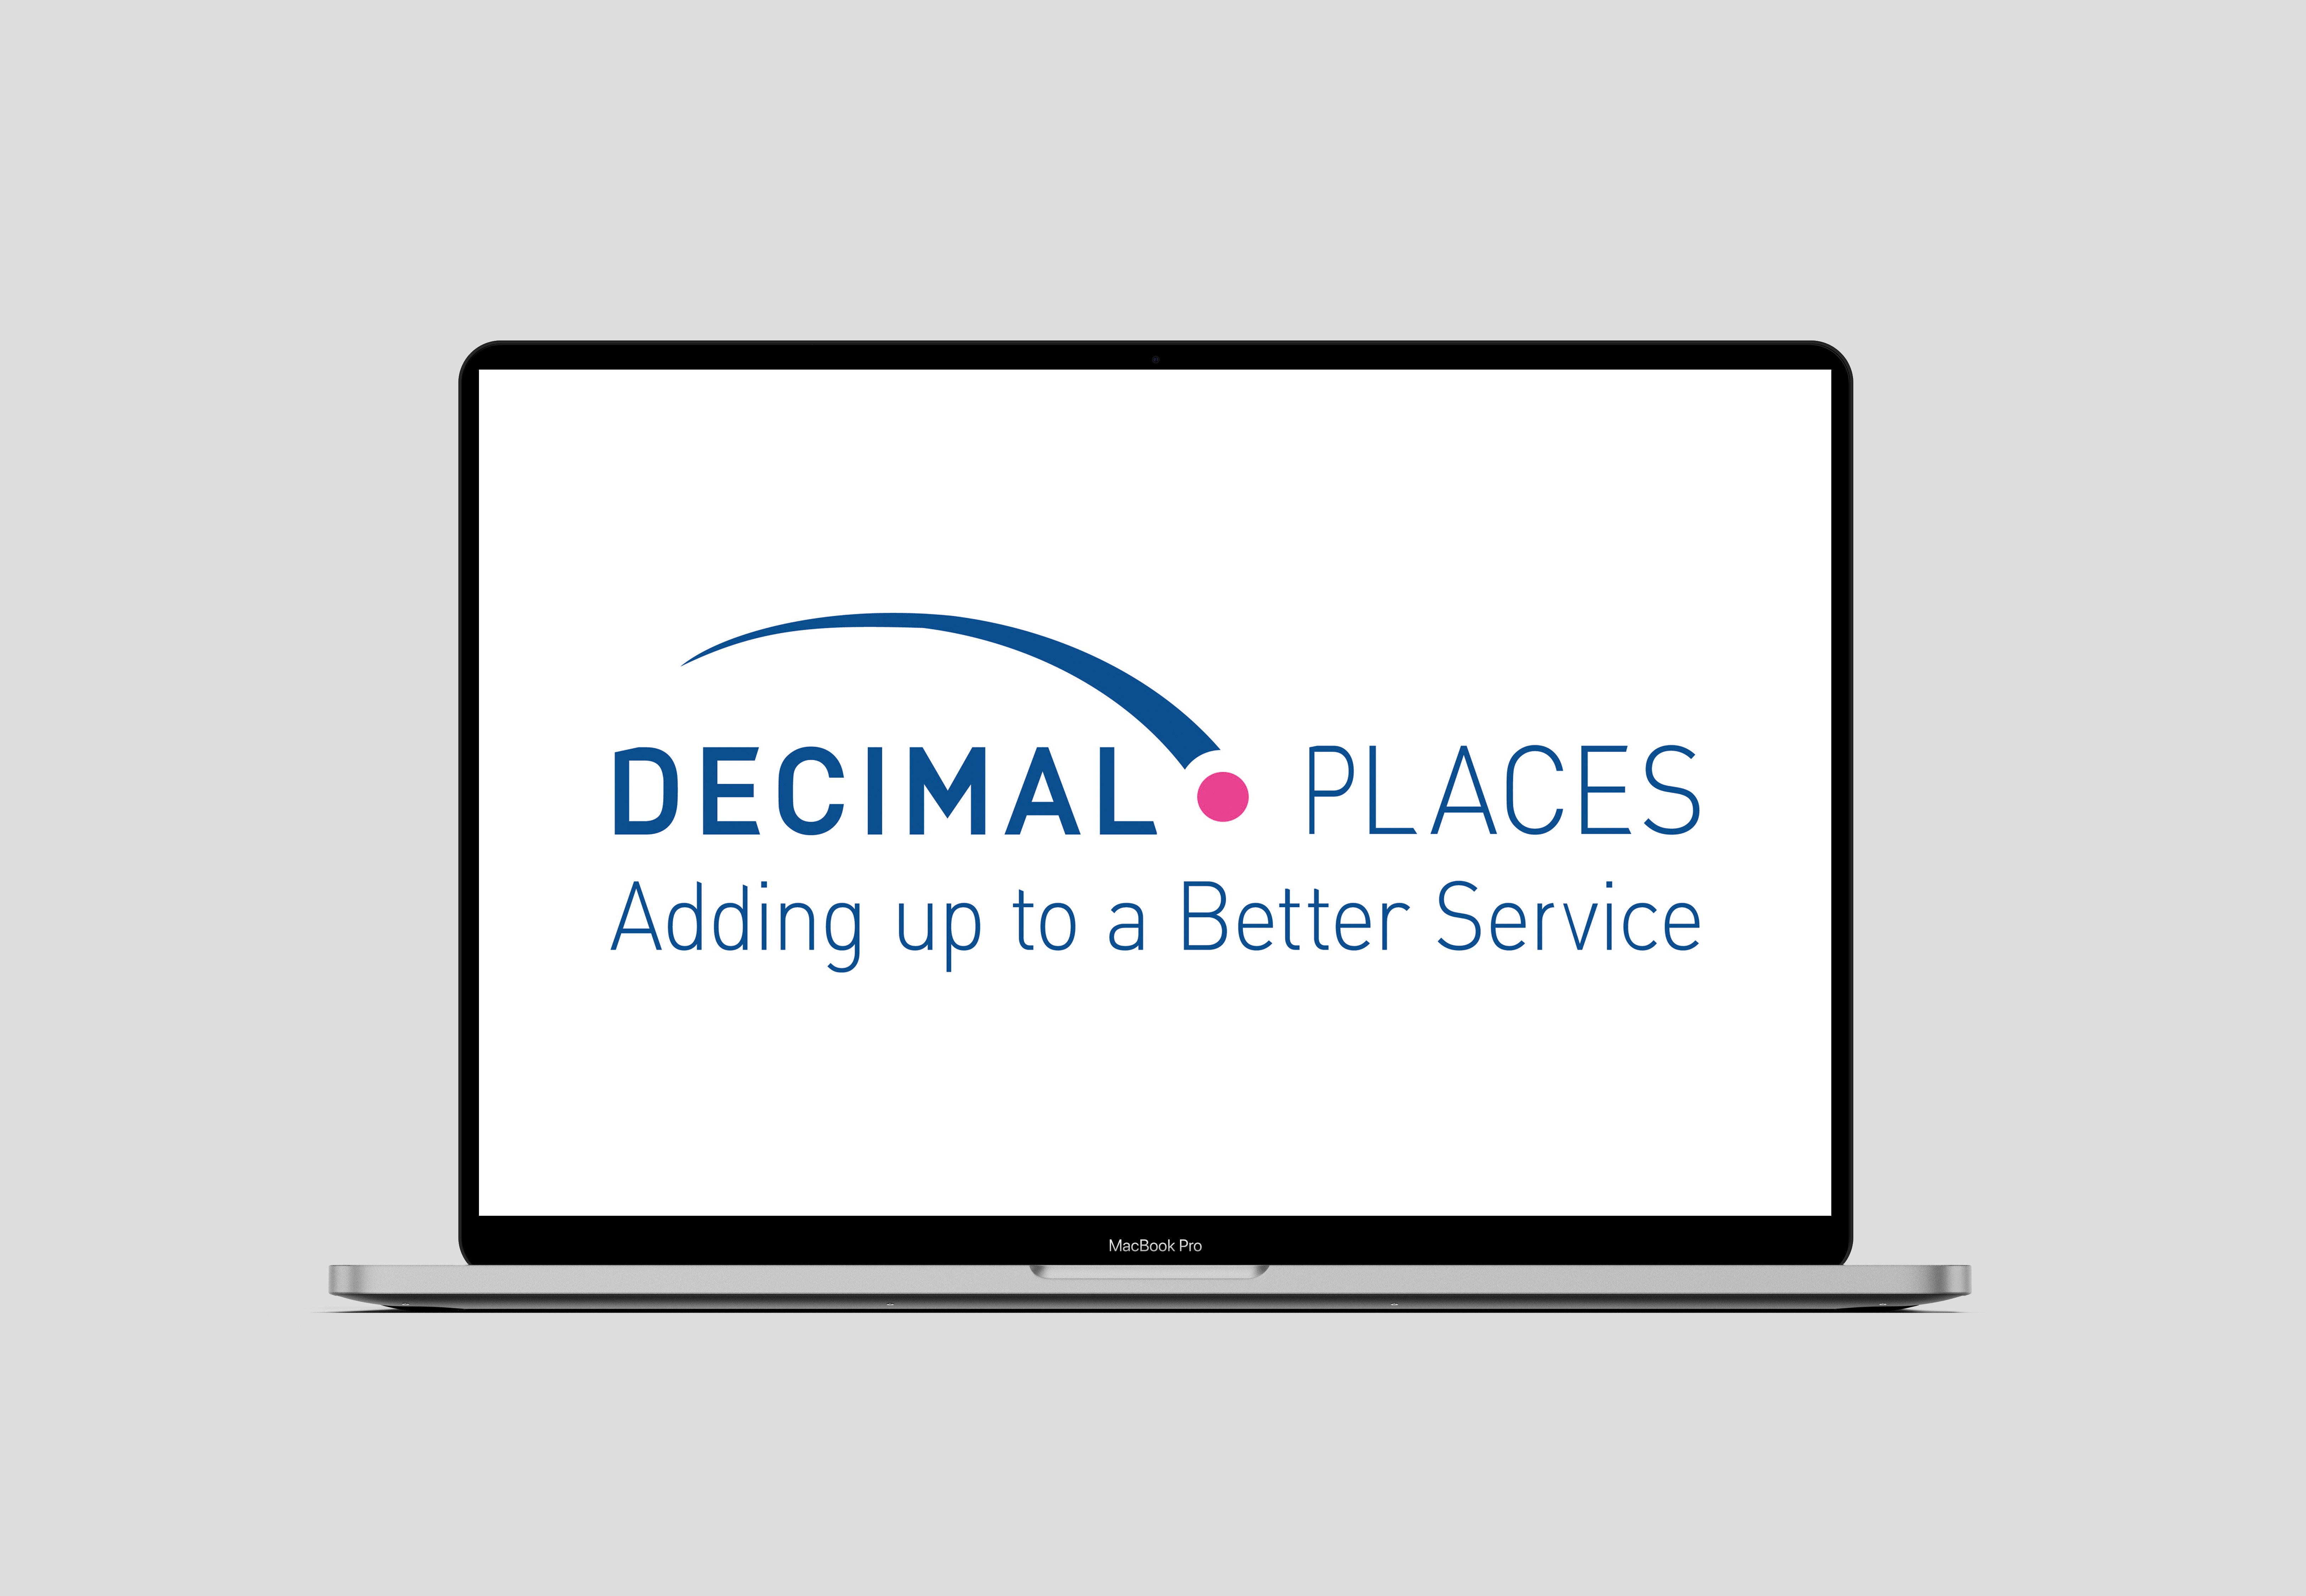 Decimal Places - Redraw existing logo